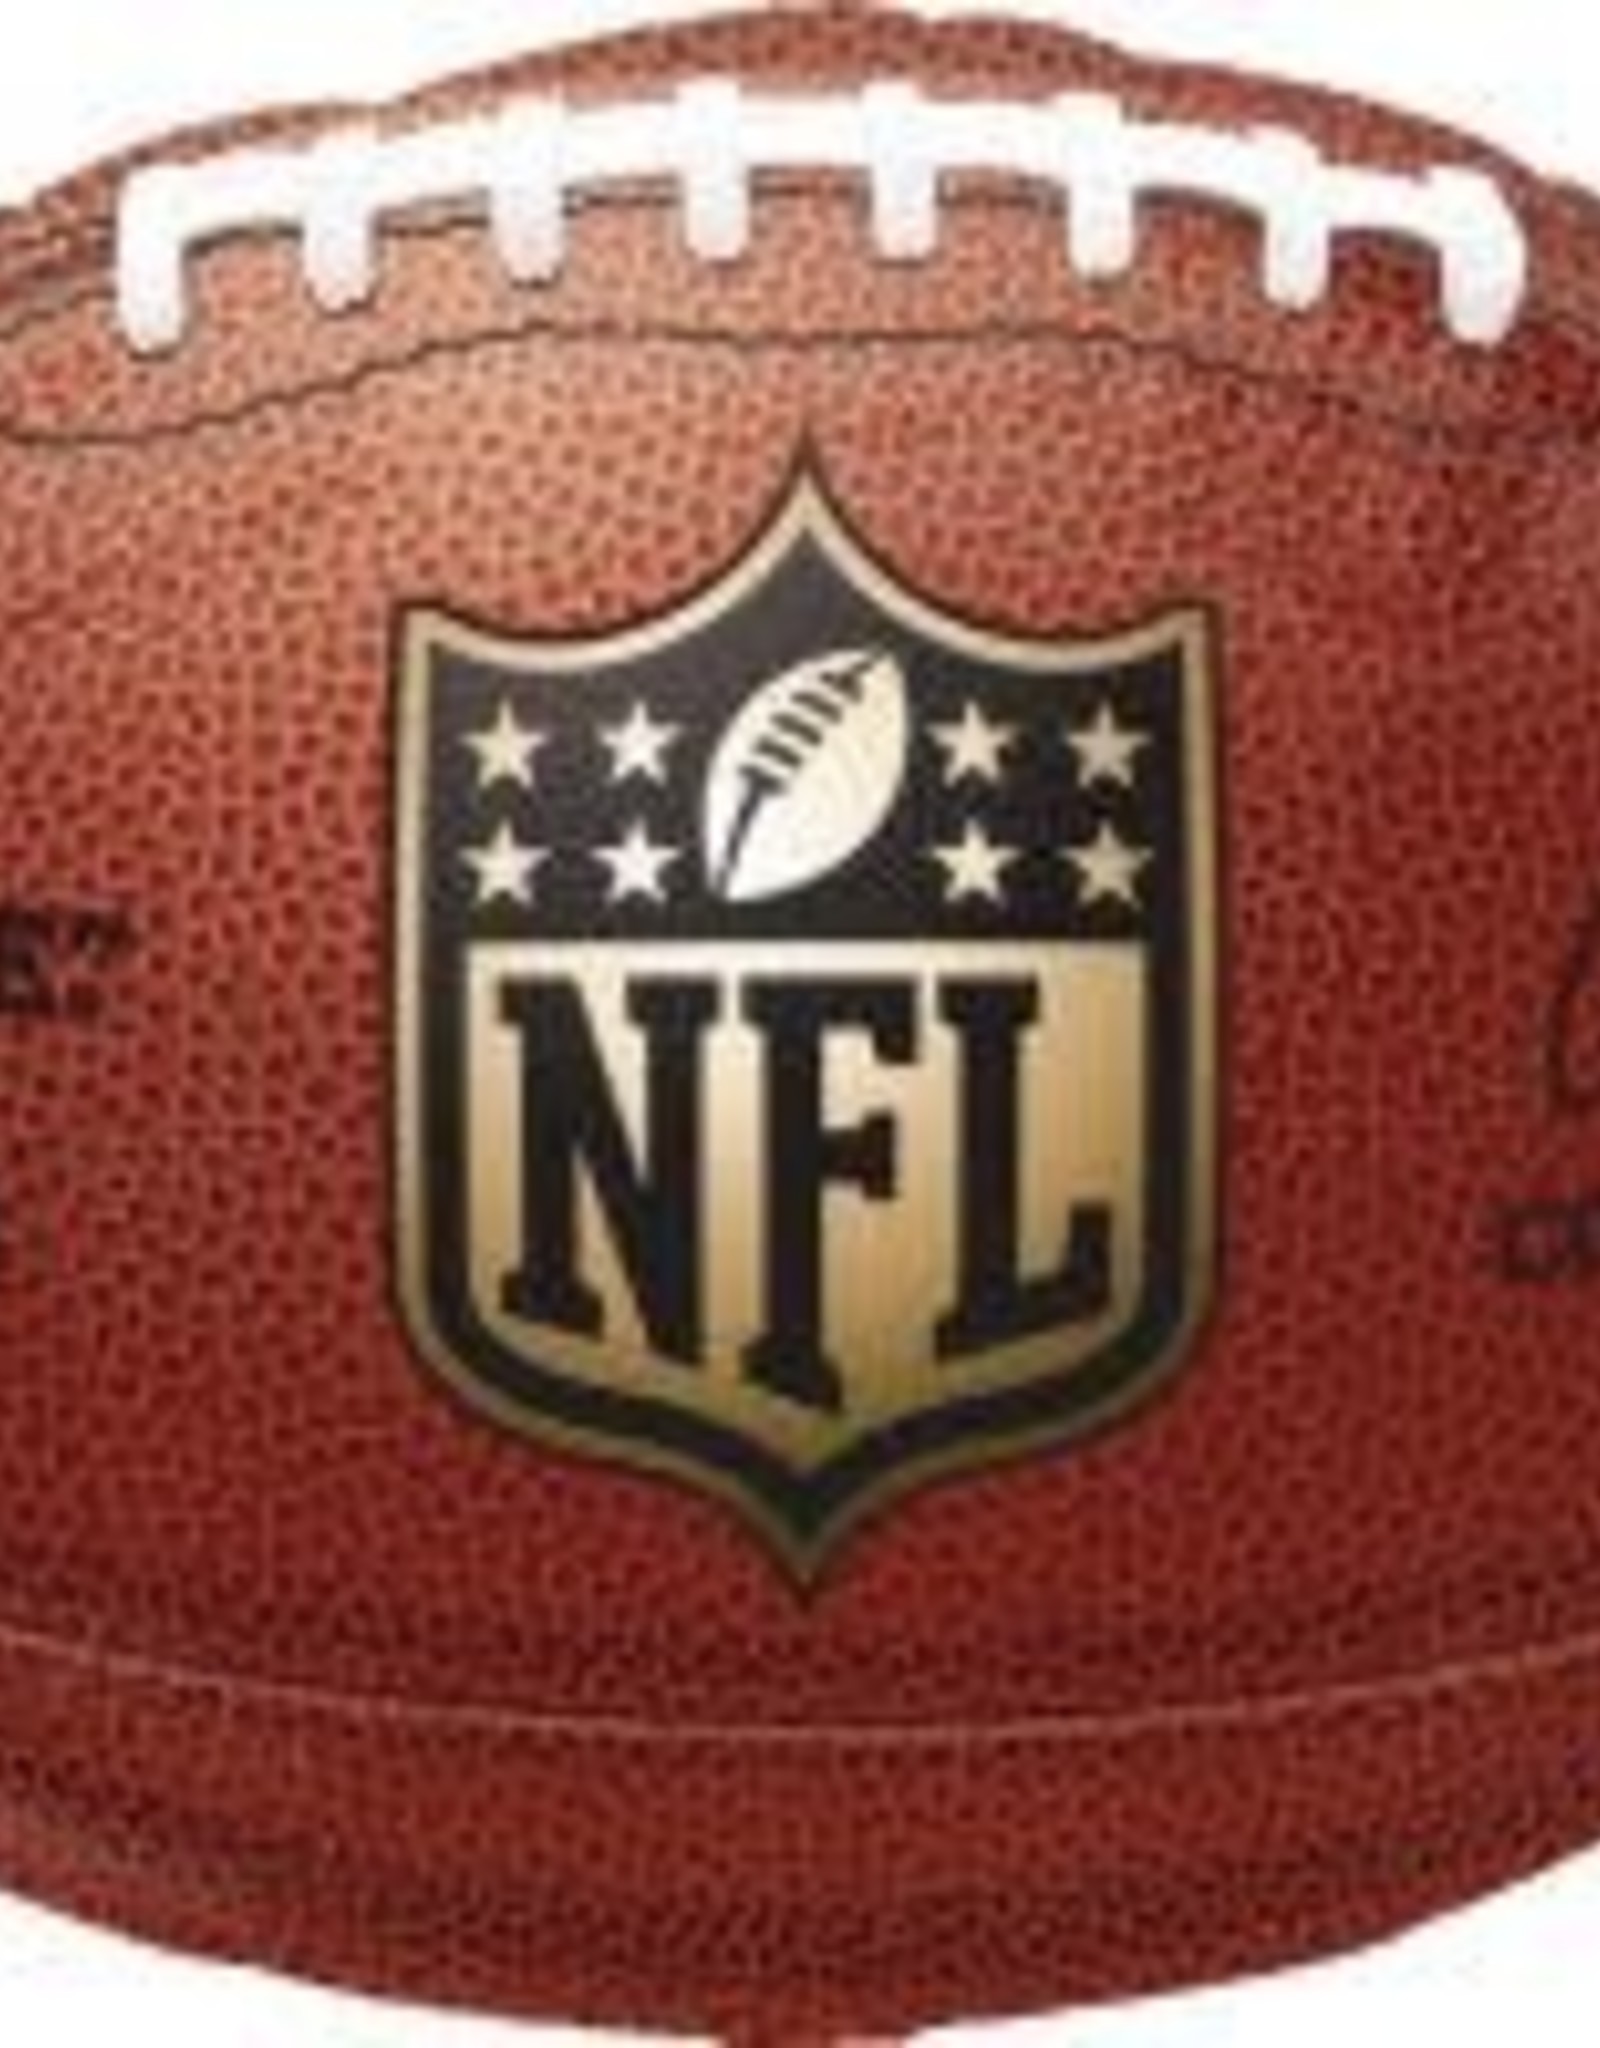 18" NFL football balloon